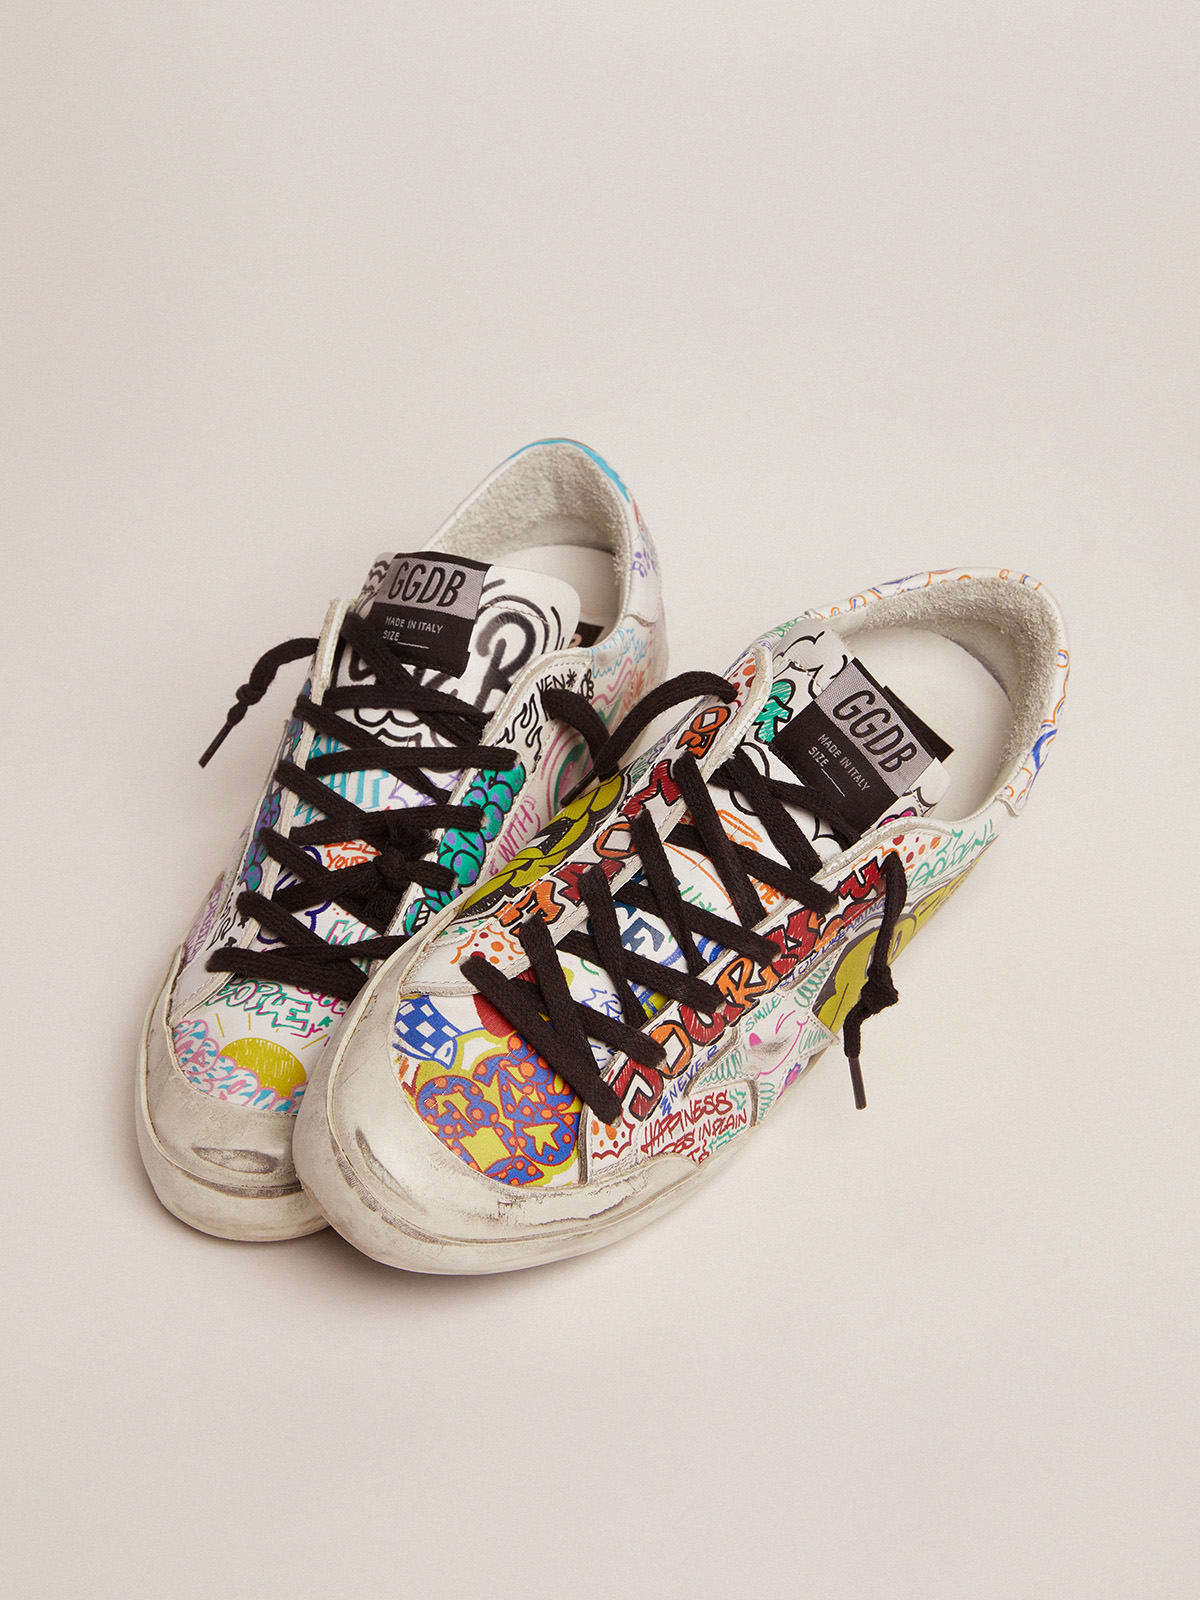 Super-Star sneakers in white leather with multicolored graffiti print ...